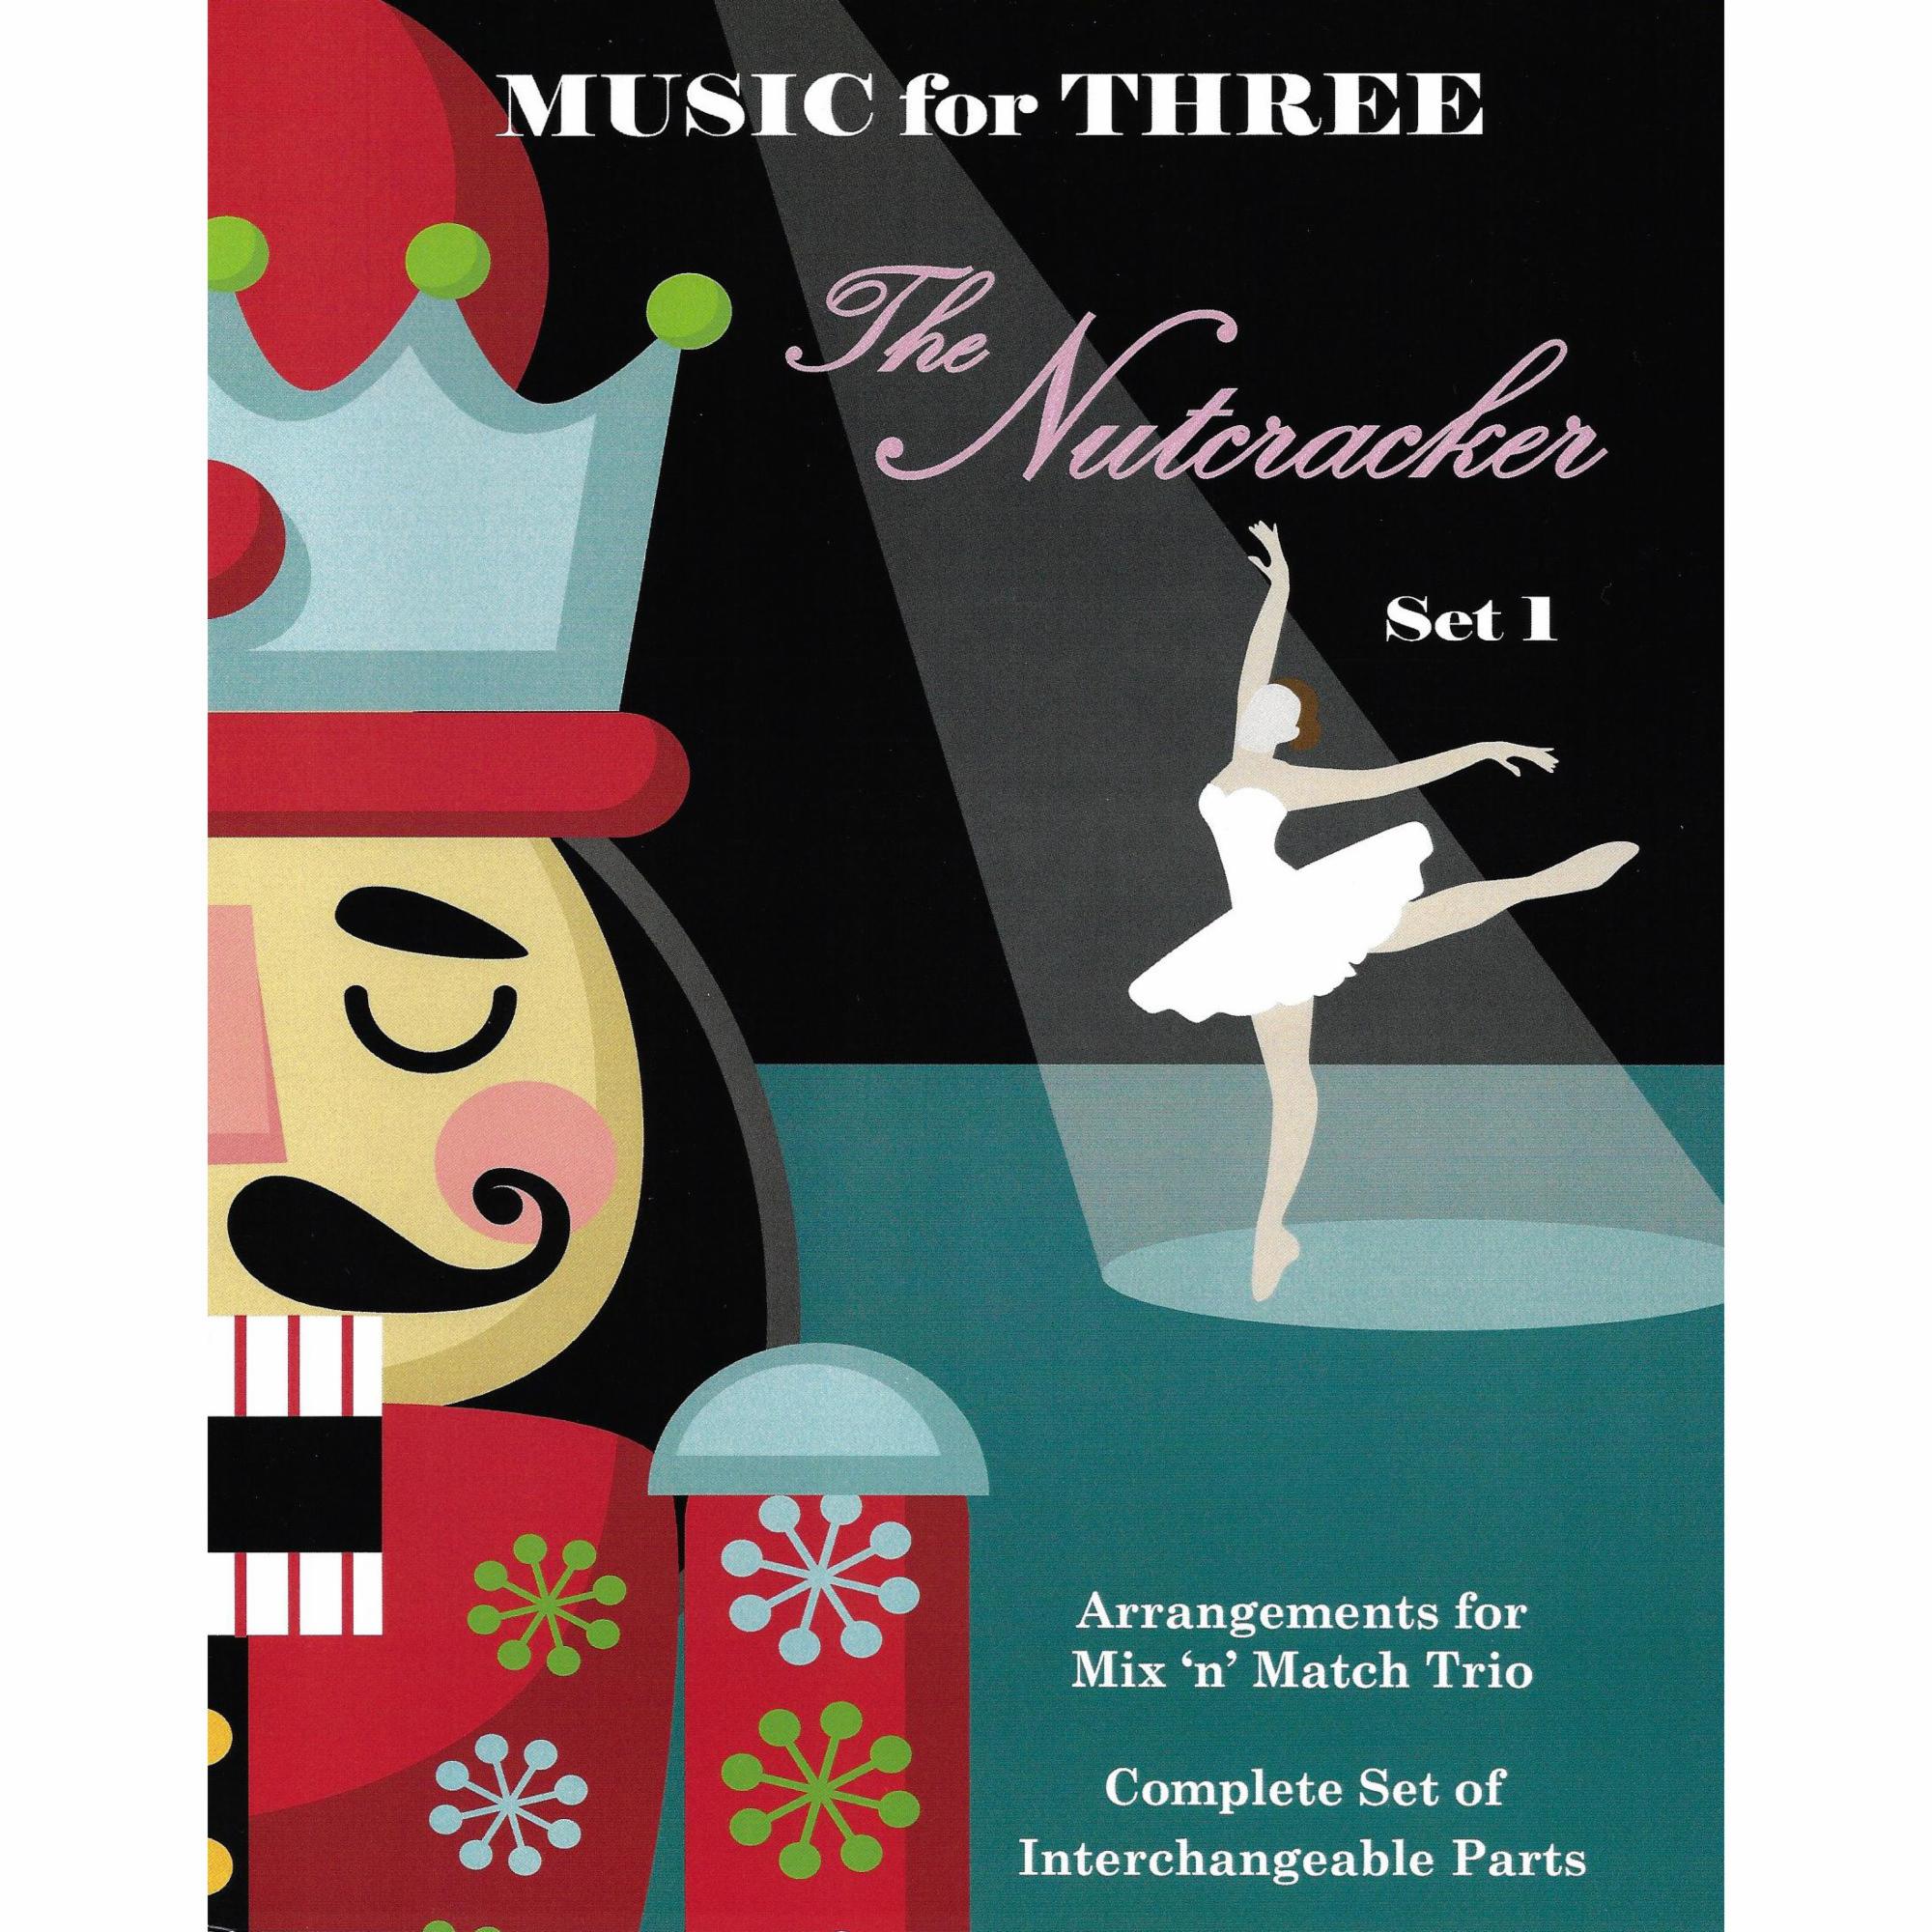 Music for Three: The Nutcracker